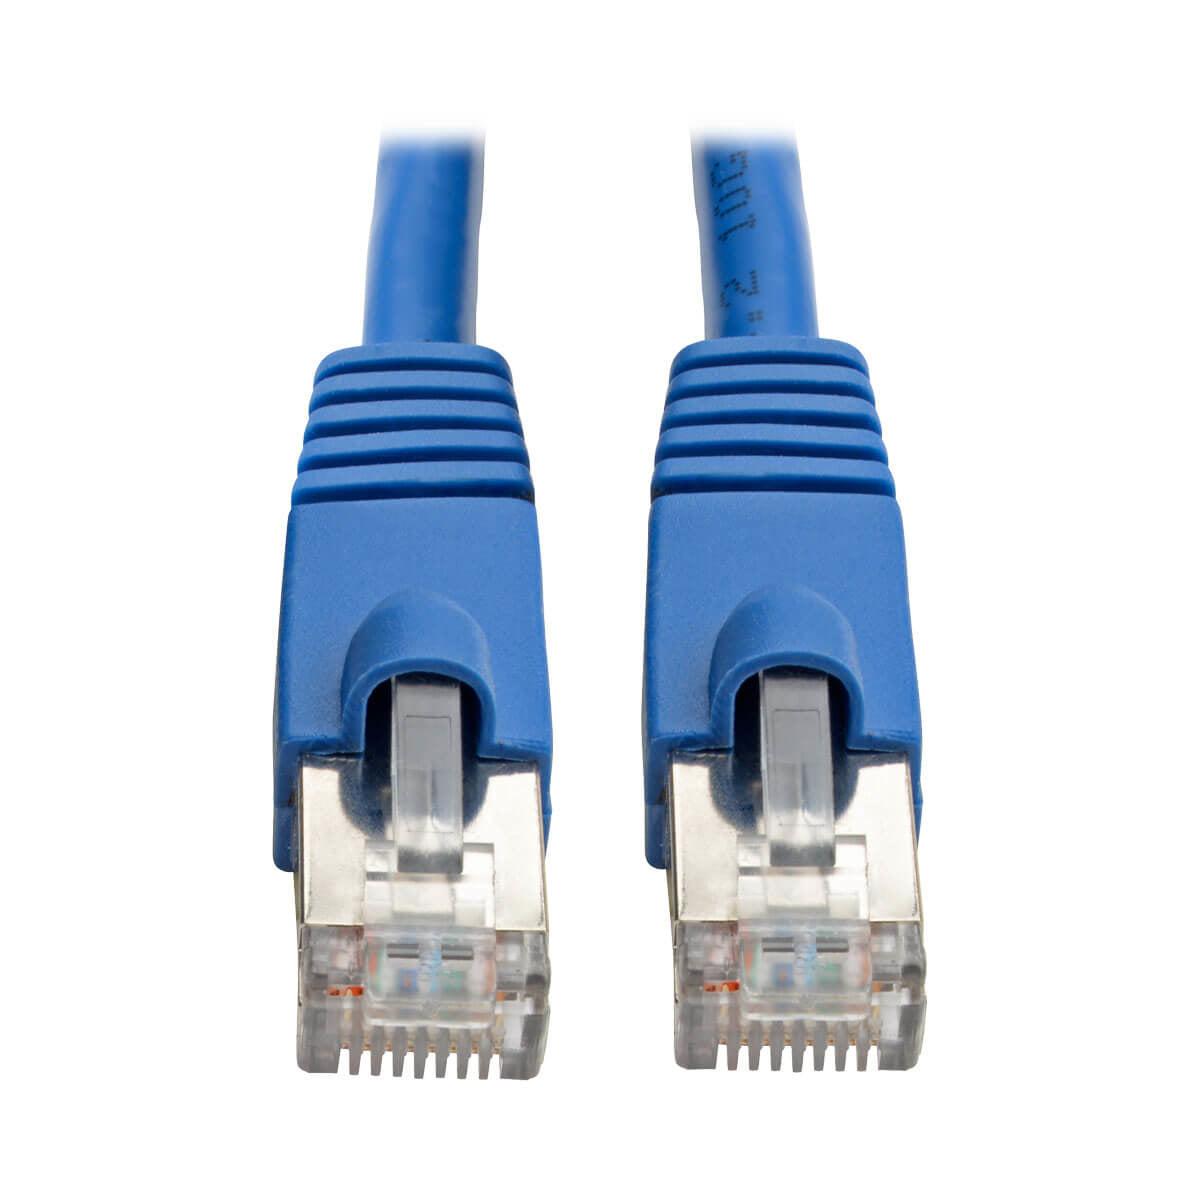 Tripp Lite N262-025-Bl Cat6A 10G-Certified Snagless Shielded Stp Ethernet Cable (Rj45 M/M), Poe, Blue, 25 Ft. (7.62 M)